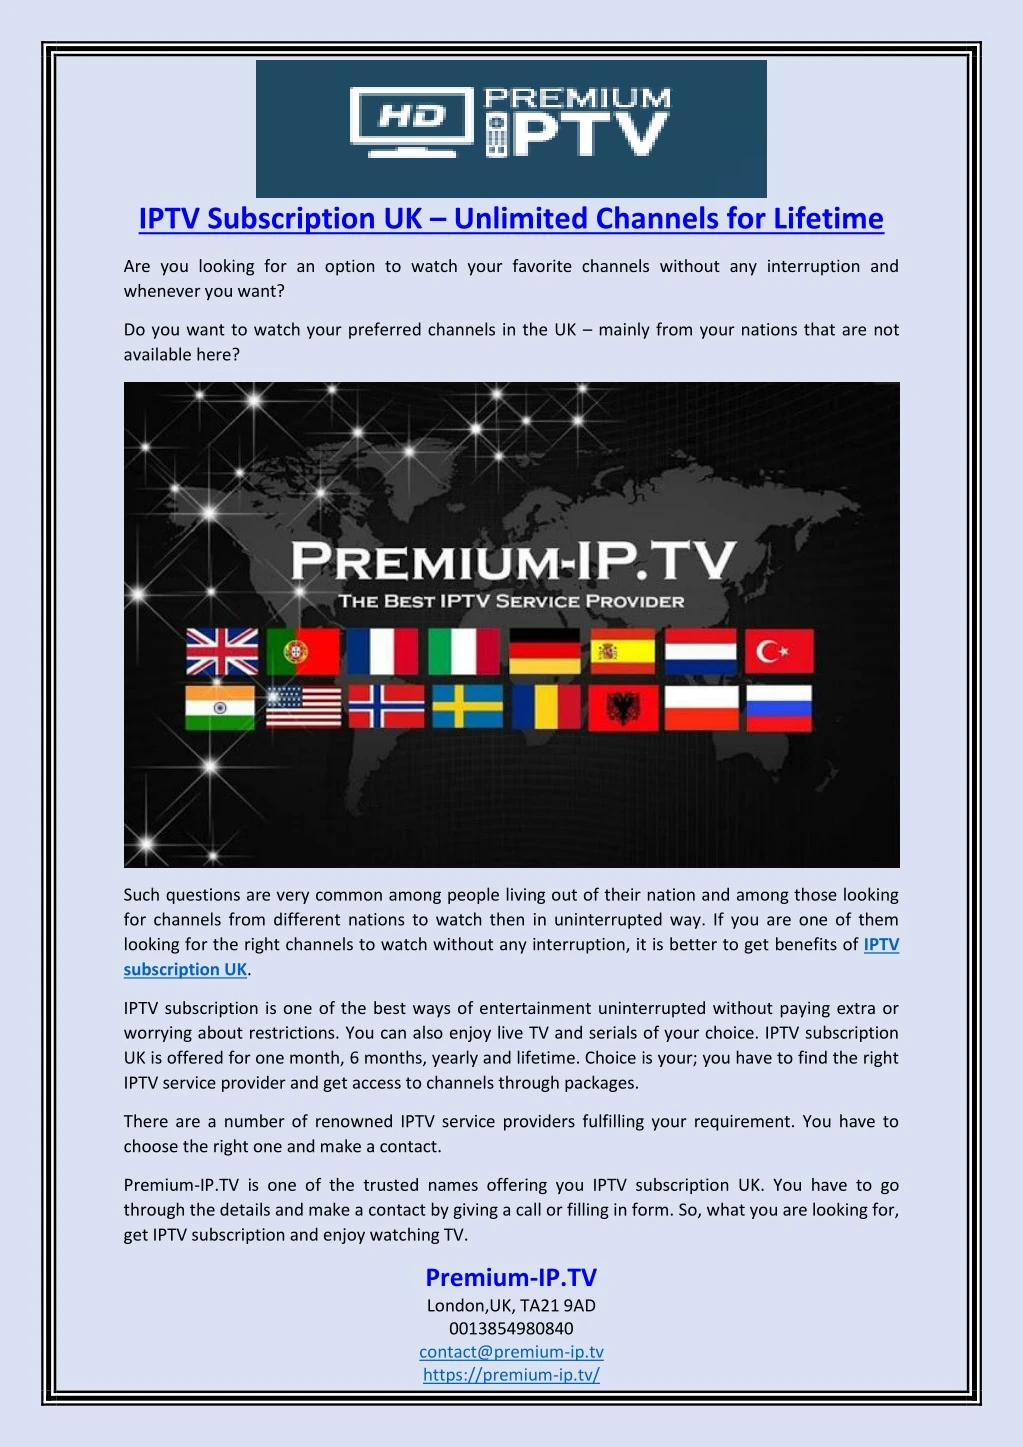 iptv subscription uk unlimited channels